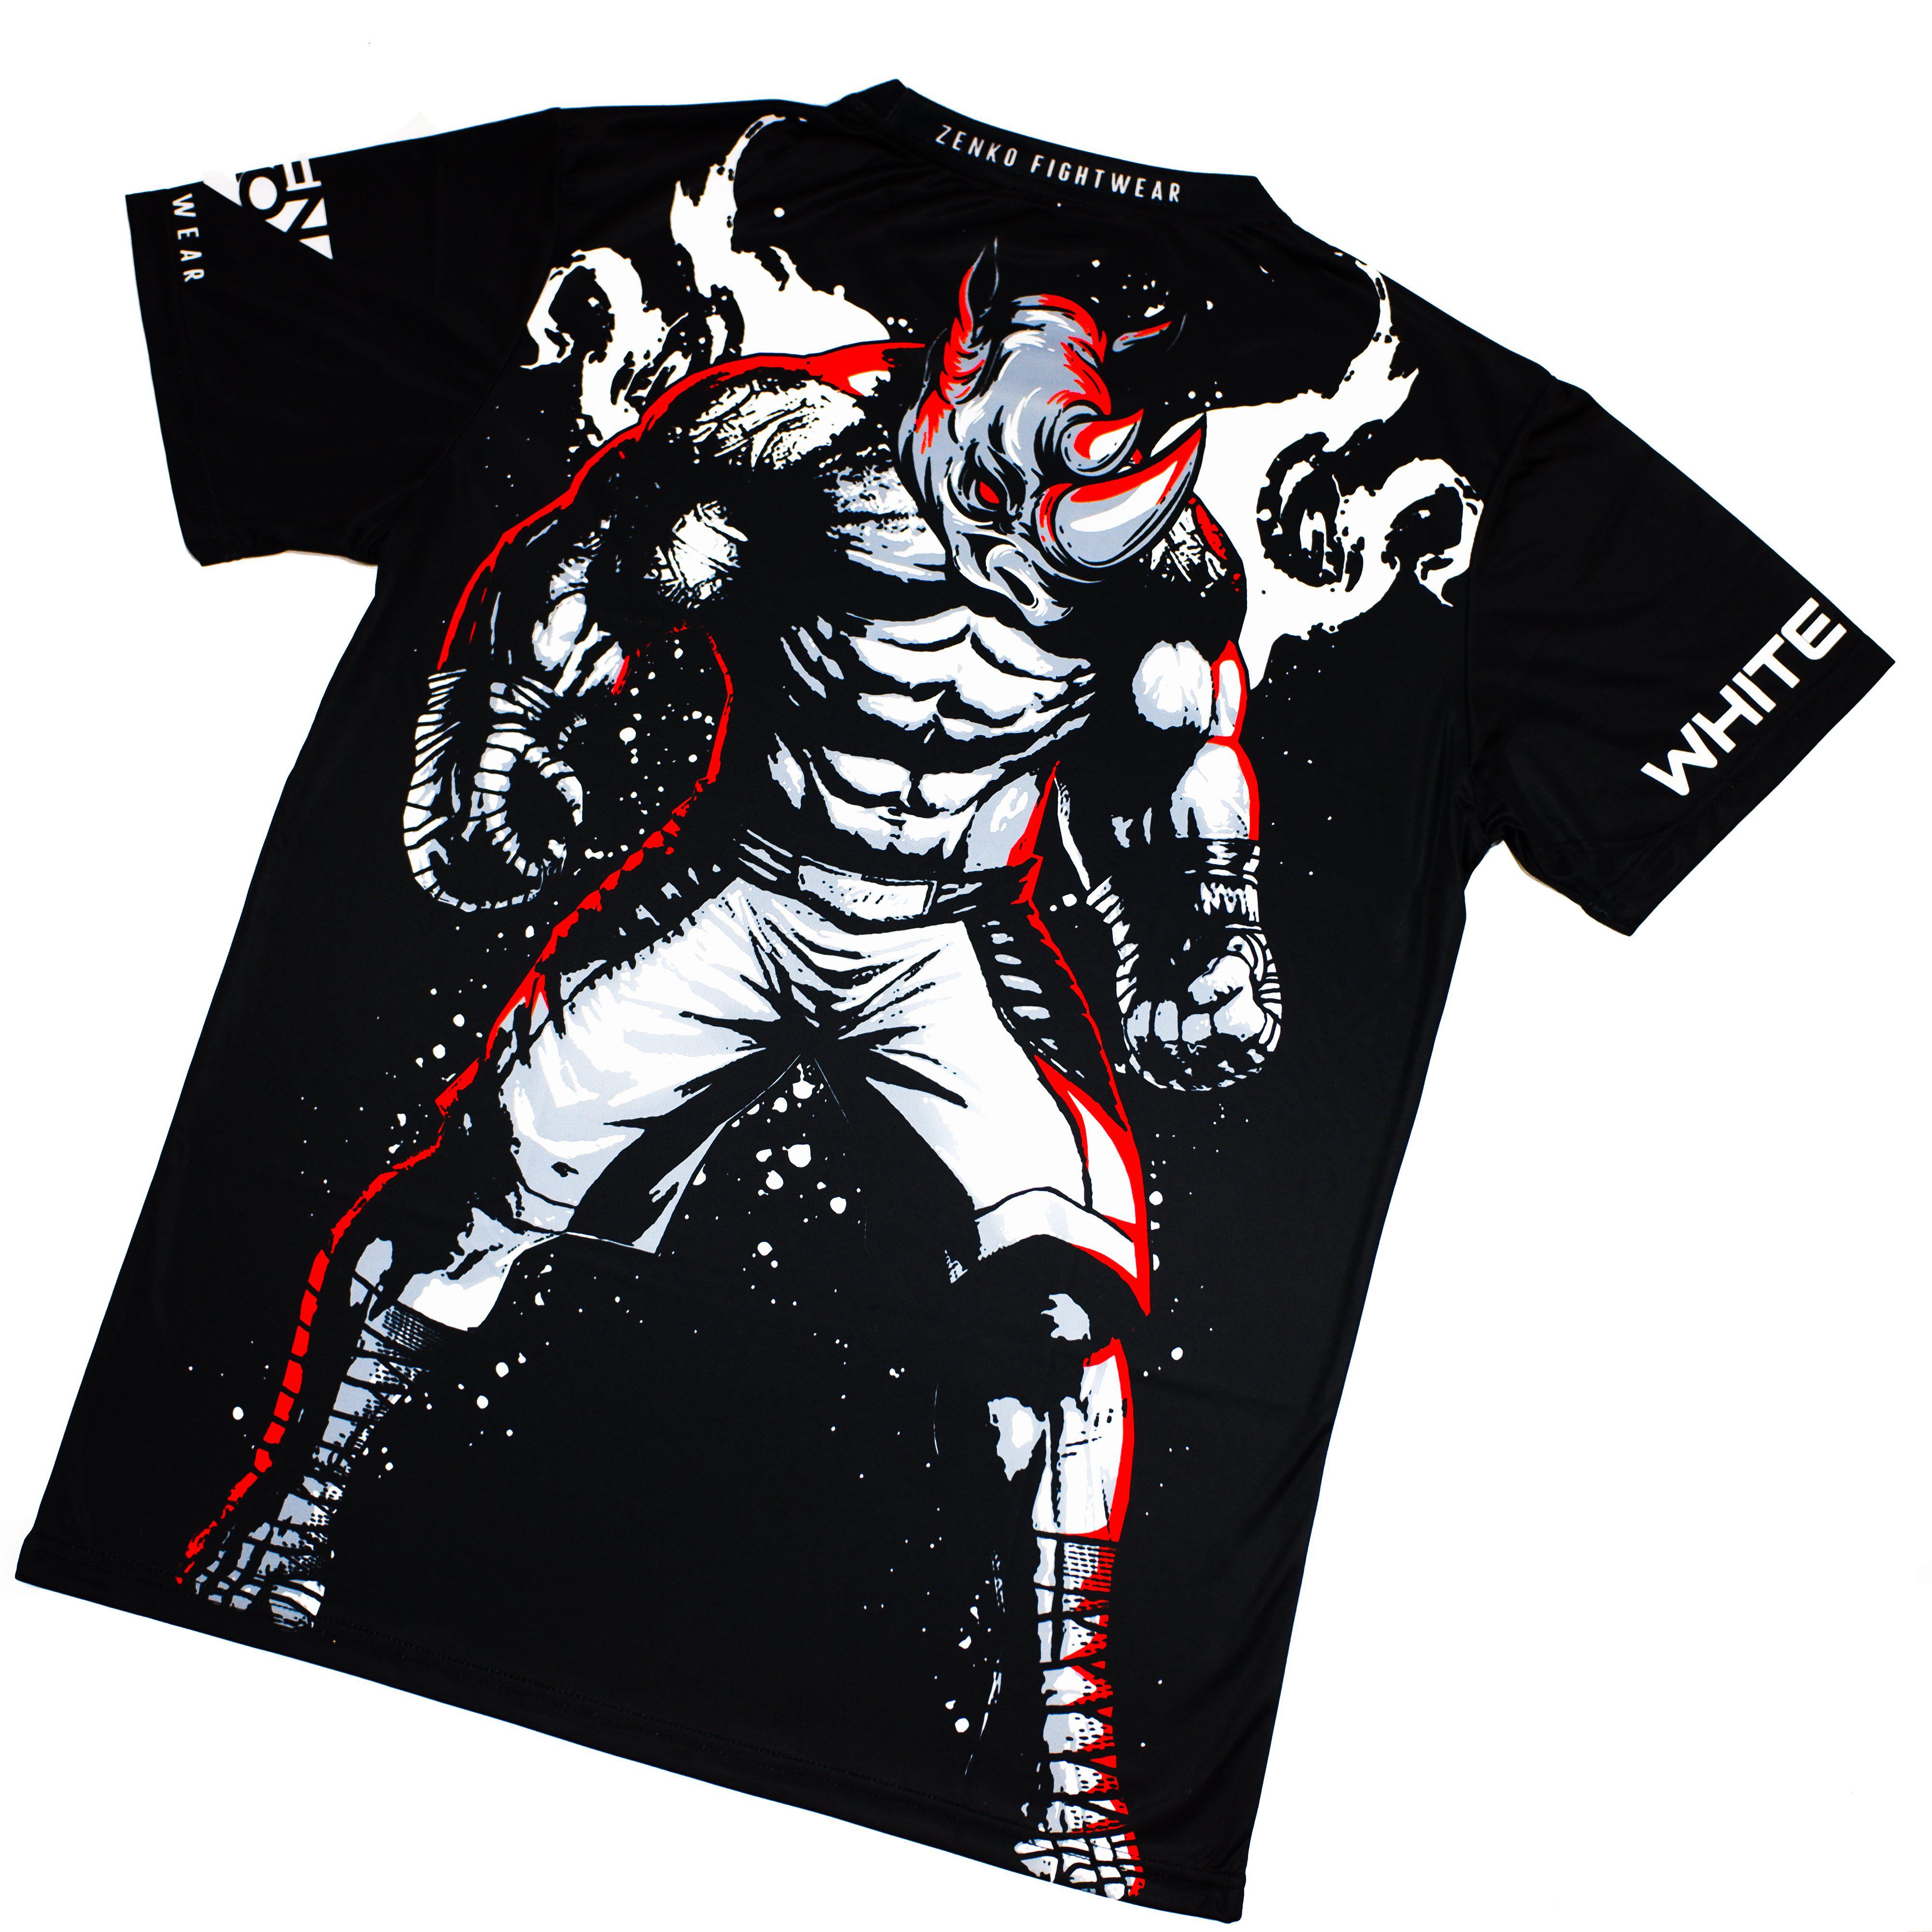 Asylum Fight Team - White Rhino Kickboxing Rhino Jersey Tee - Zenko Fightwear